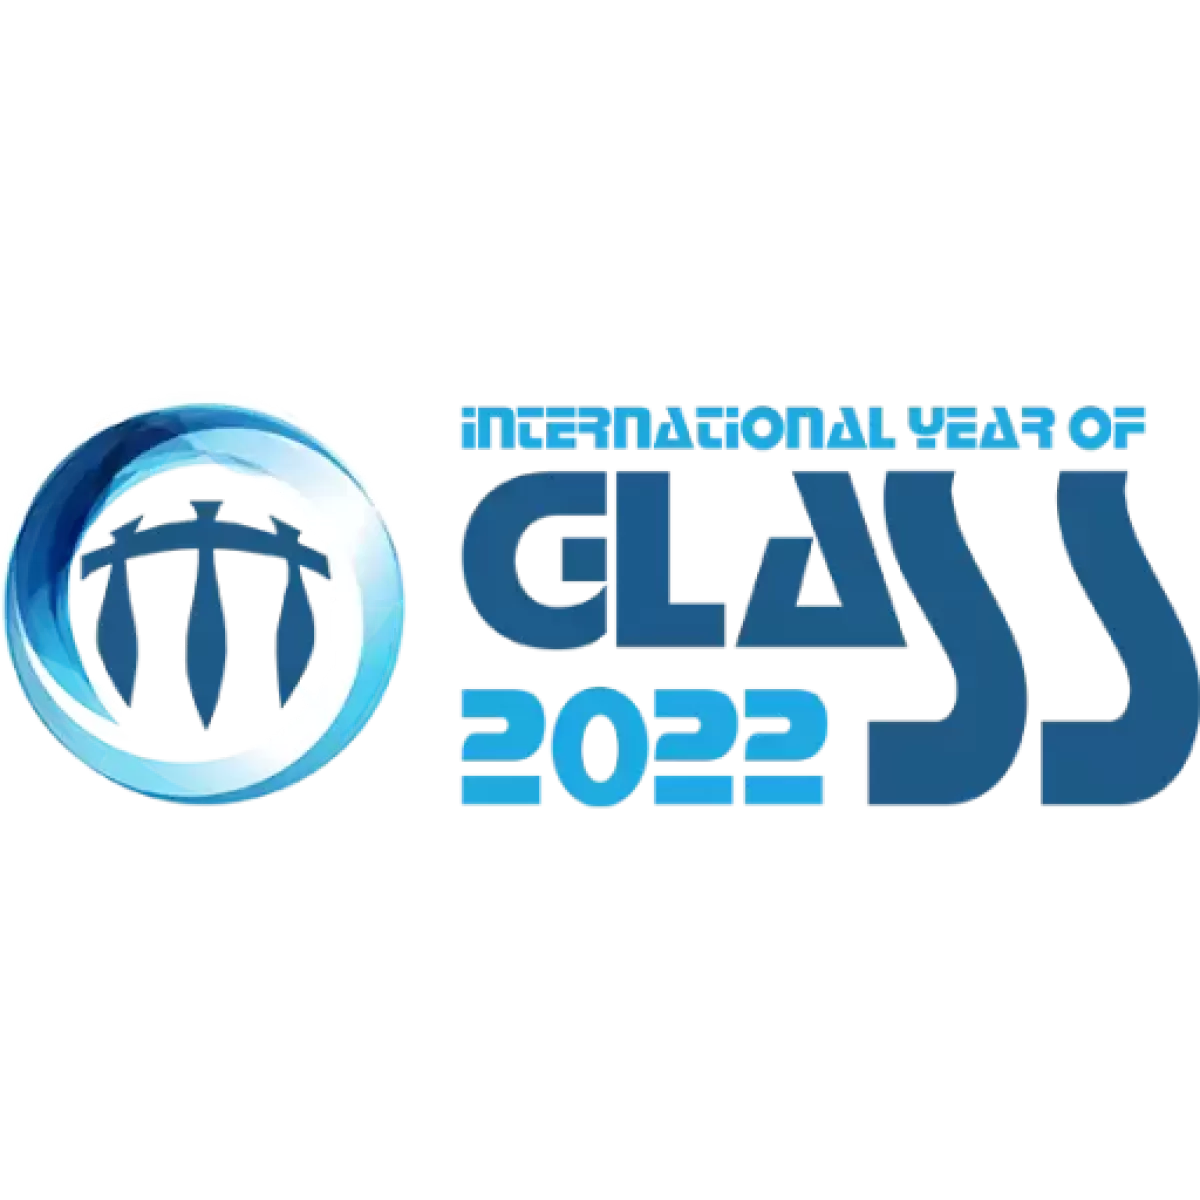 International Year of Glass 2022 logo